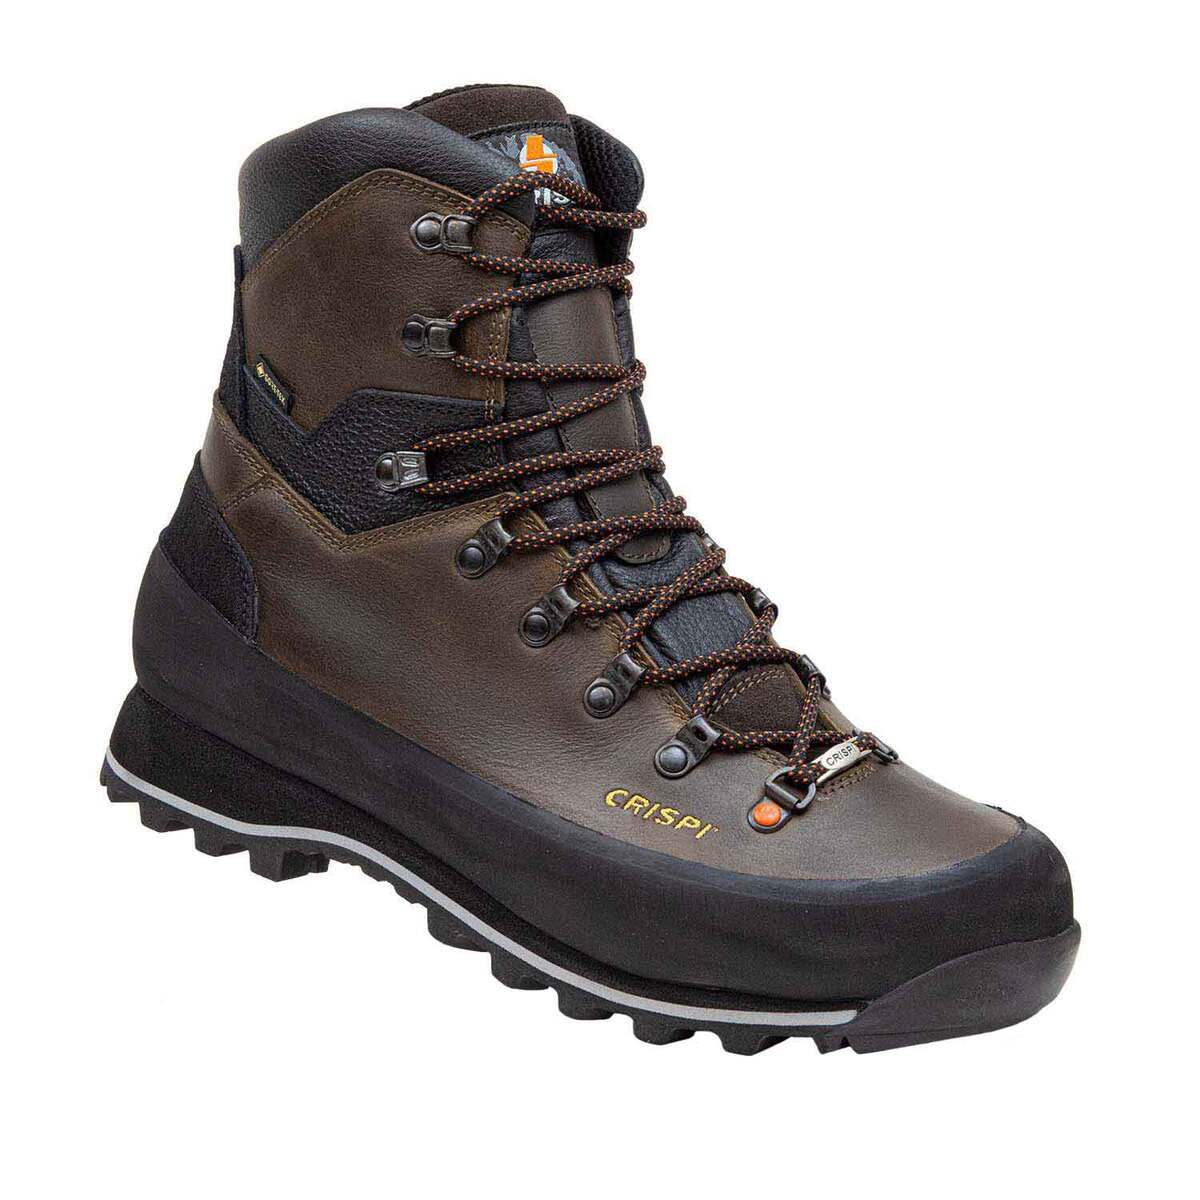 Crispi Men's Shimek 400g Insulated Hunting Boots - Brown - Size 14 ...